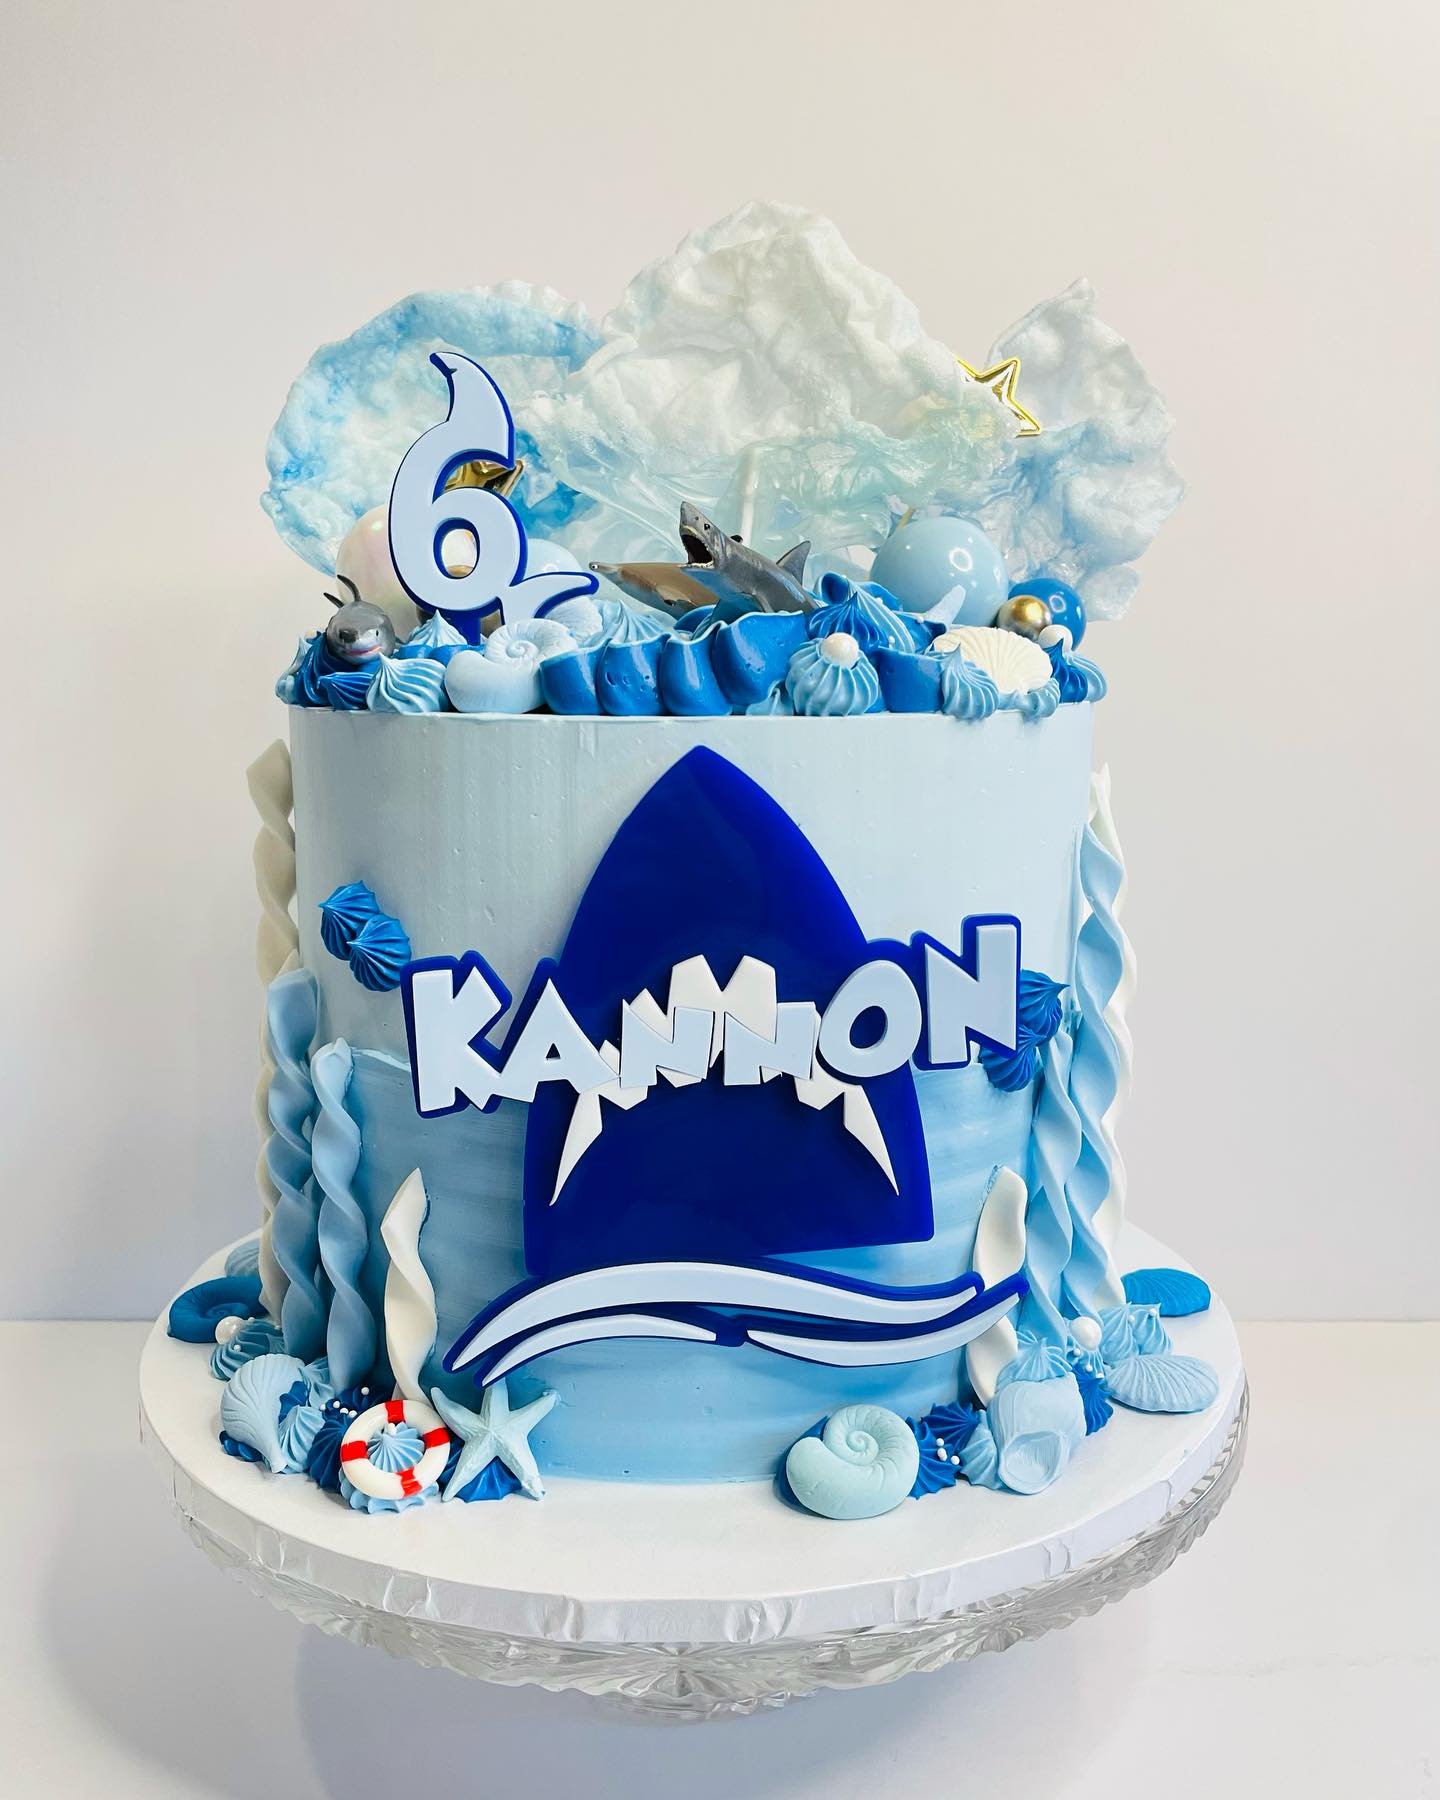 Shark cake! 🦈🌊
I had so much fun making this adorable cake. Happy birthday Kannon! 💙

#sharkcakes #sharkcake #mamaramsaysdesserts #mamaramsay #whenyoucalljustaskformama #oceancakes #Moderncake #customcakesatlanta #thebakefeed #bakestagram #bakingg